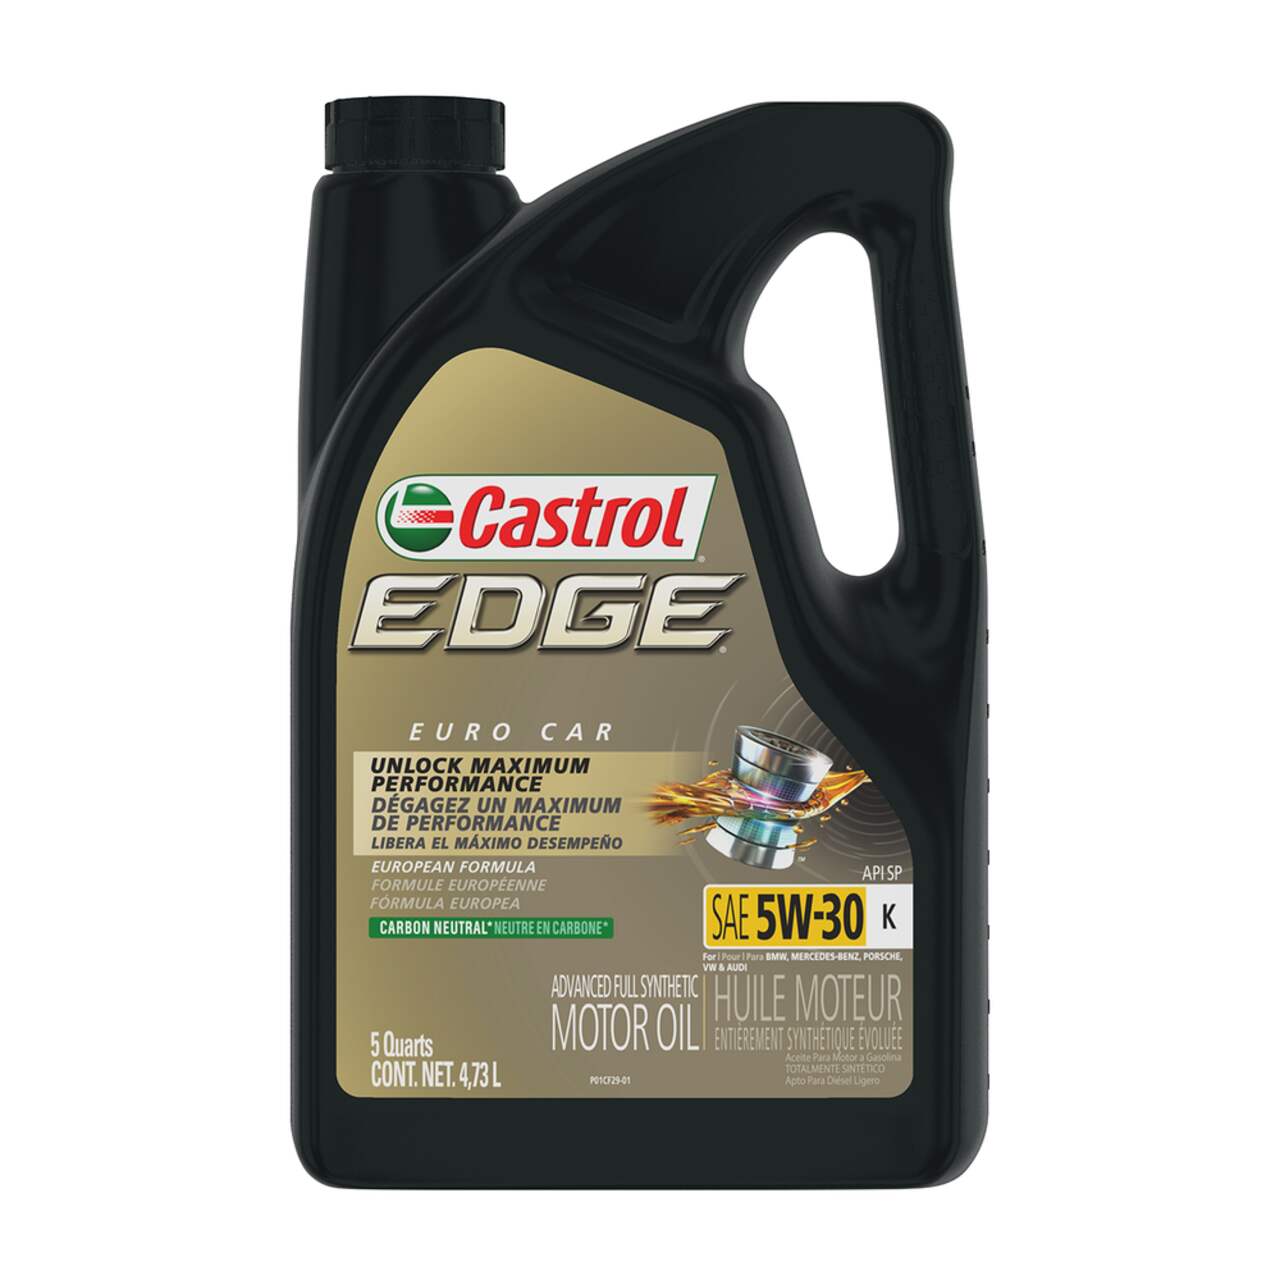 Castrol Edge 5W30 K Synthetic Engine Oil